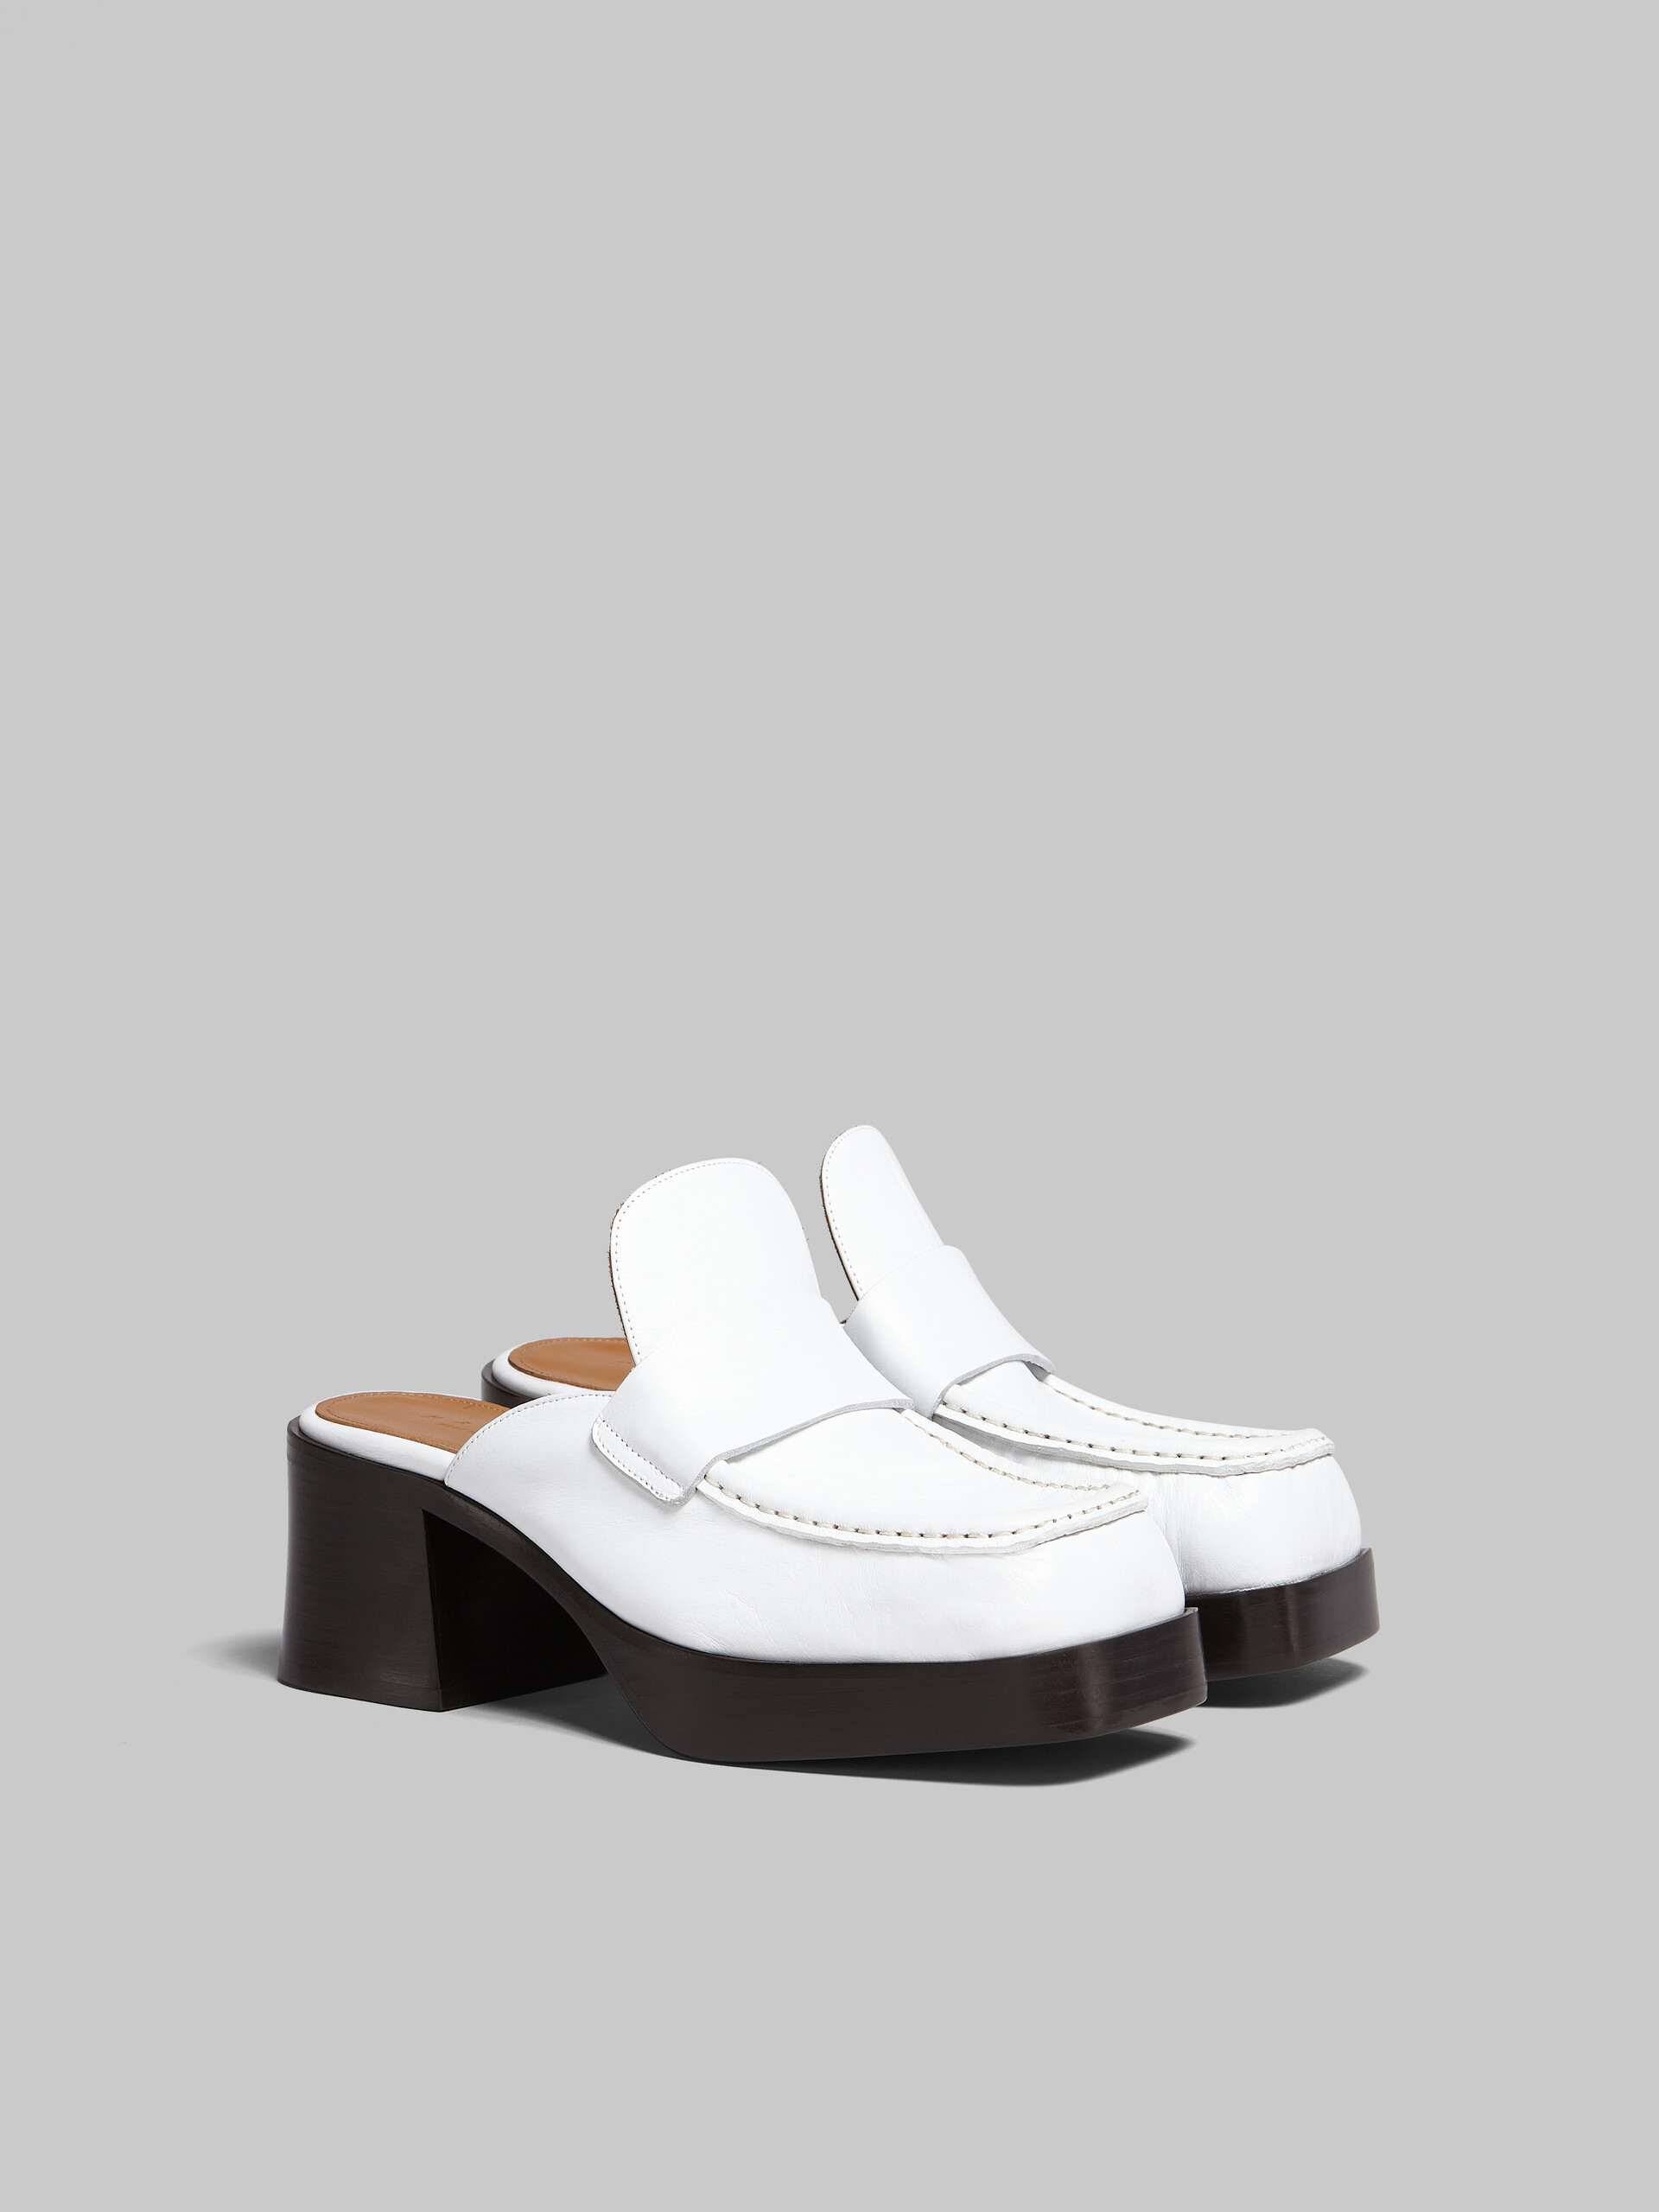 White leather heeled mule - Clogs - Image 2